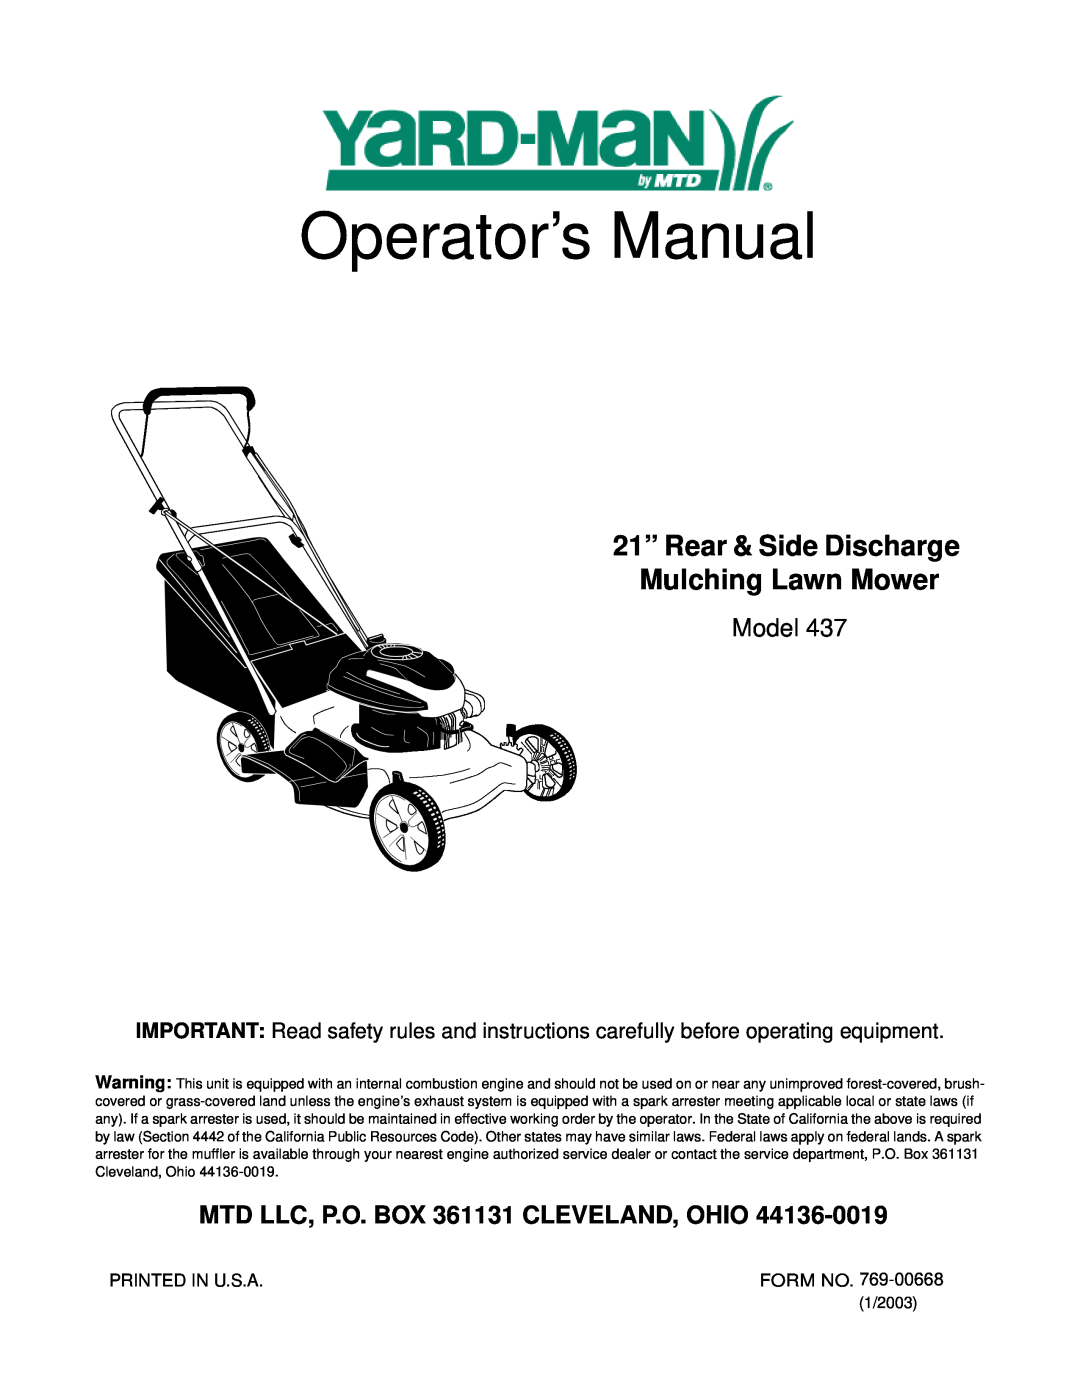 Yard-Man 437 manual Operator’s Manual, 21” Rear & Side Discharge Mulching Lawn Mower, Model 